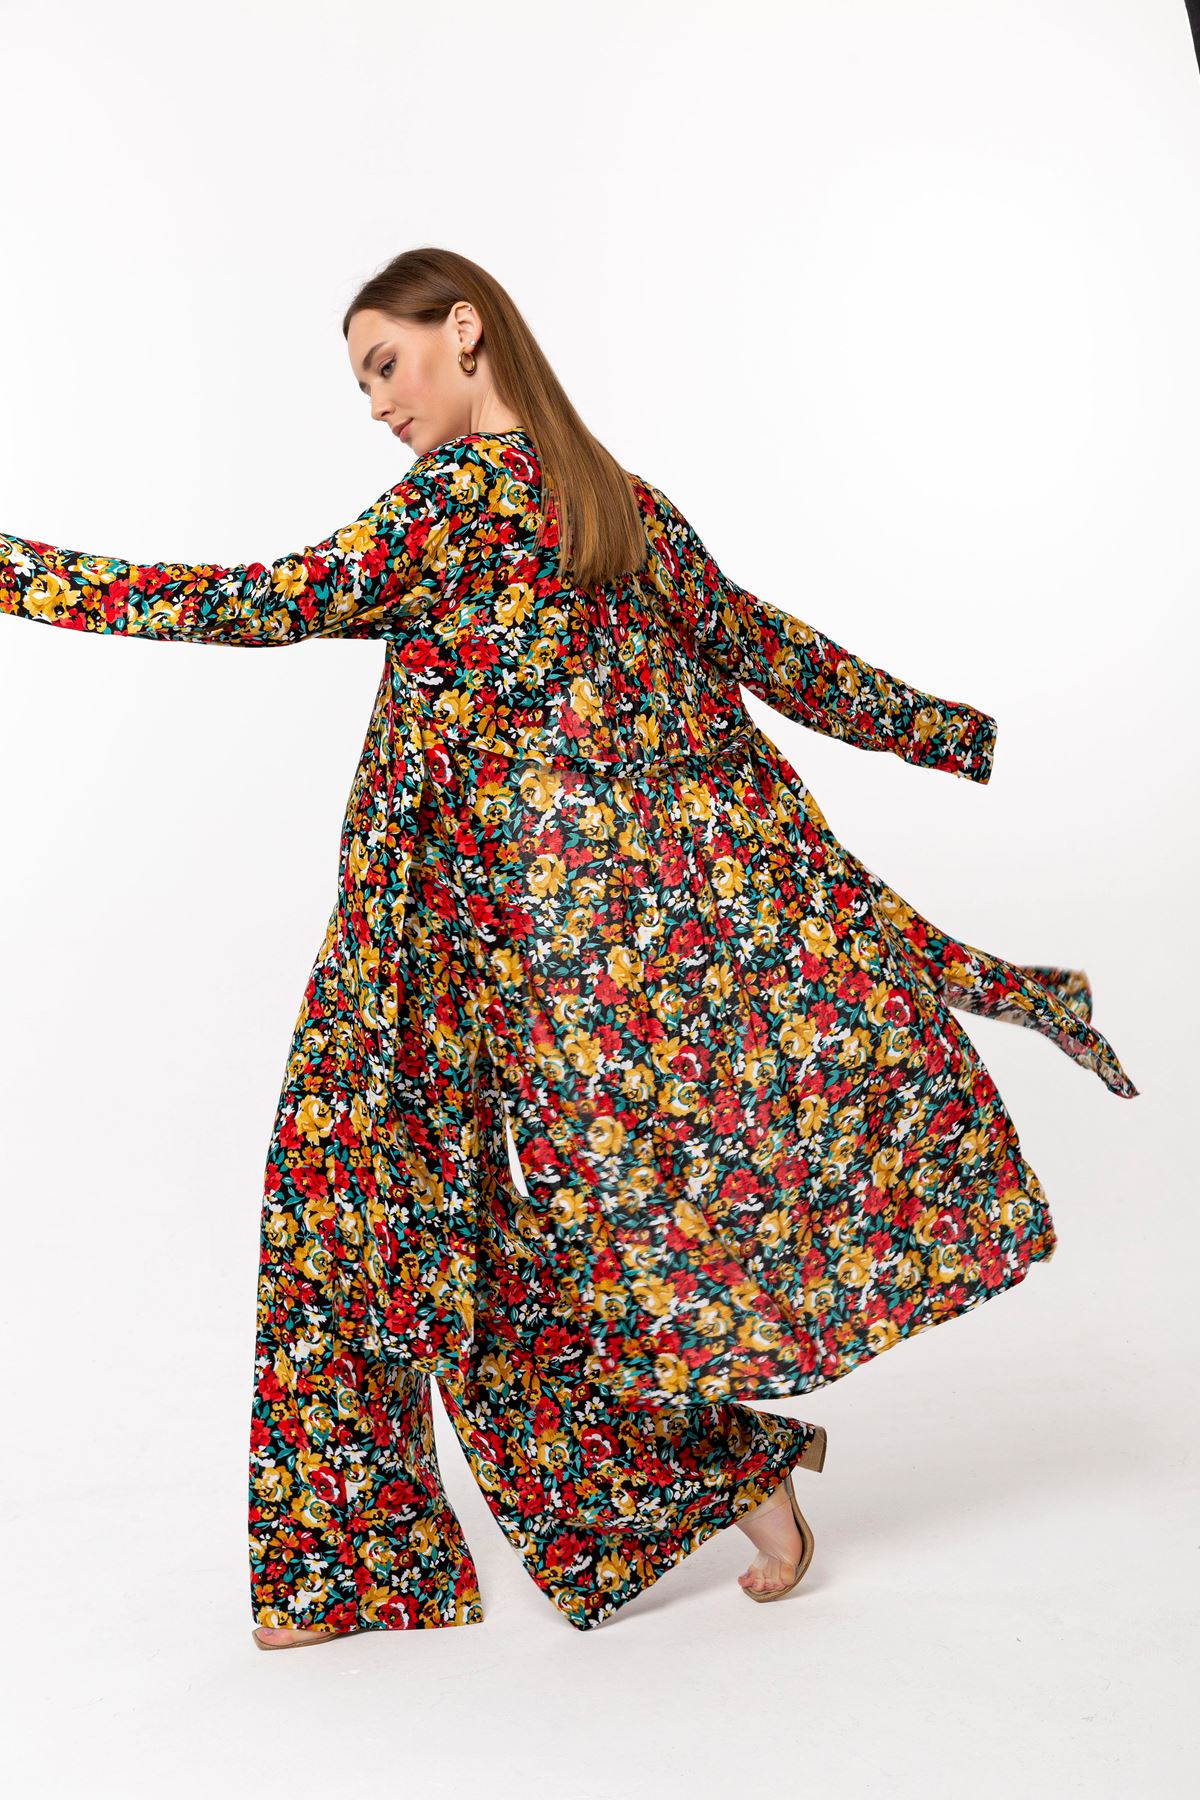 Viscose Fabric Long Sleeve Without Collar Long Oversize Floral Print Women Kimono - Mustard